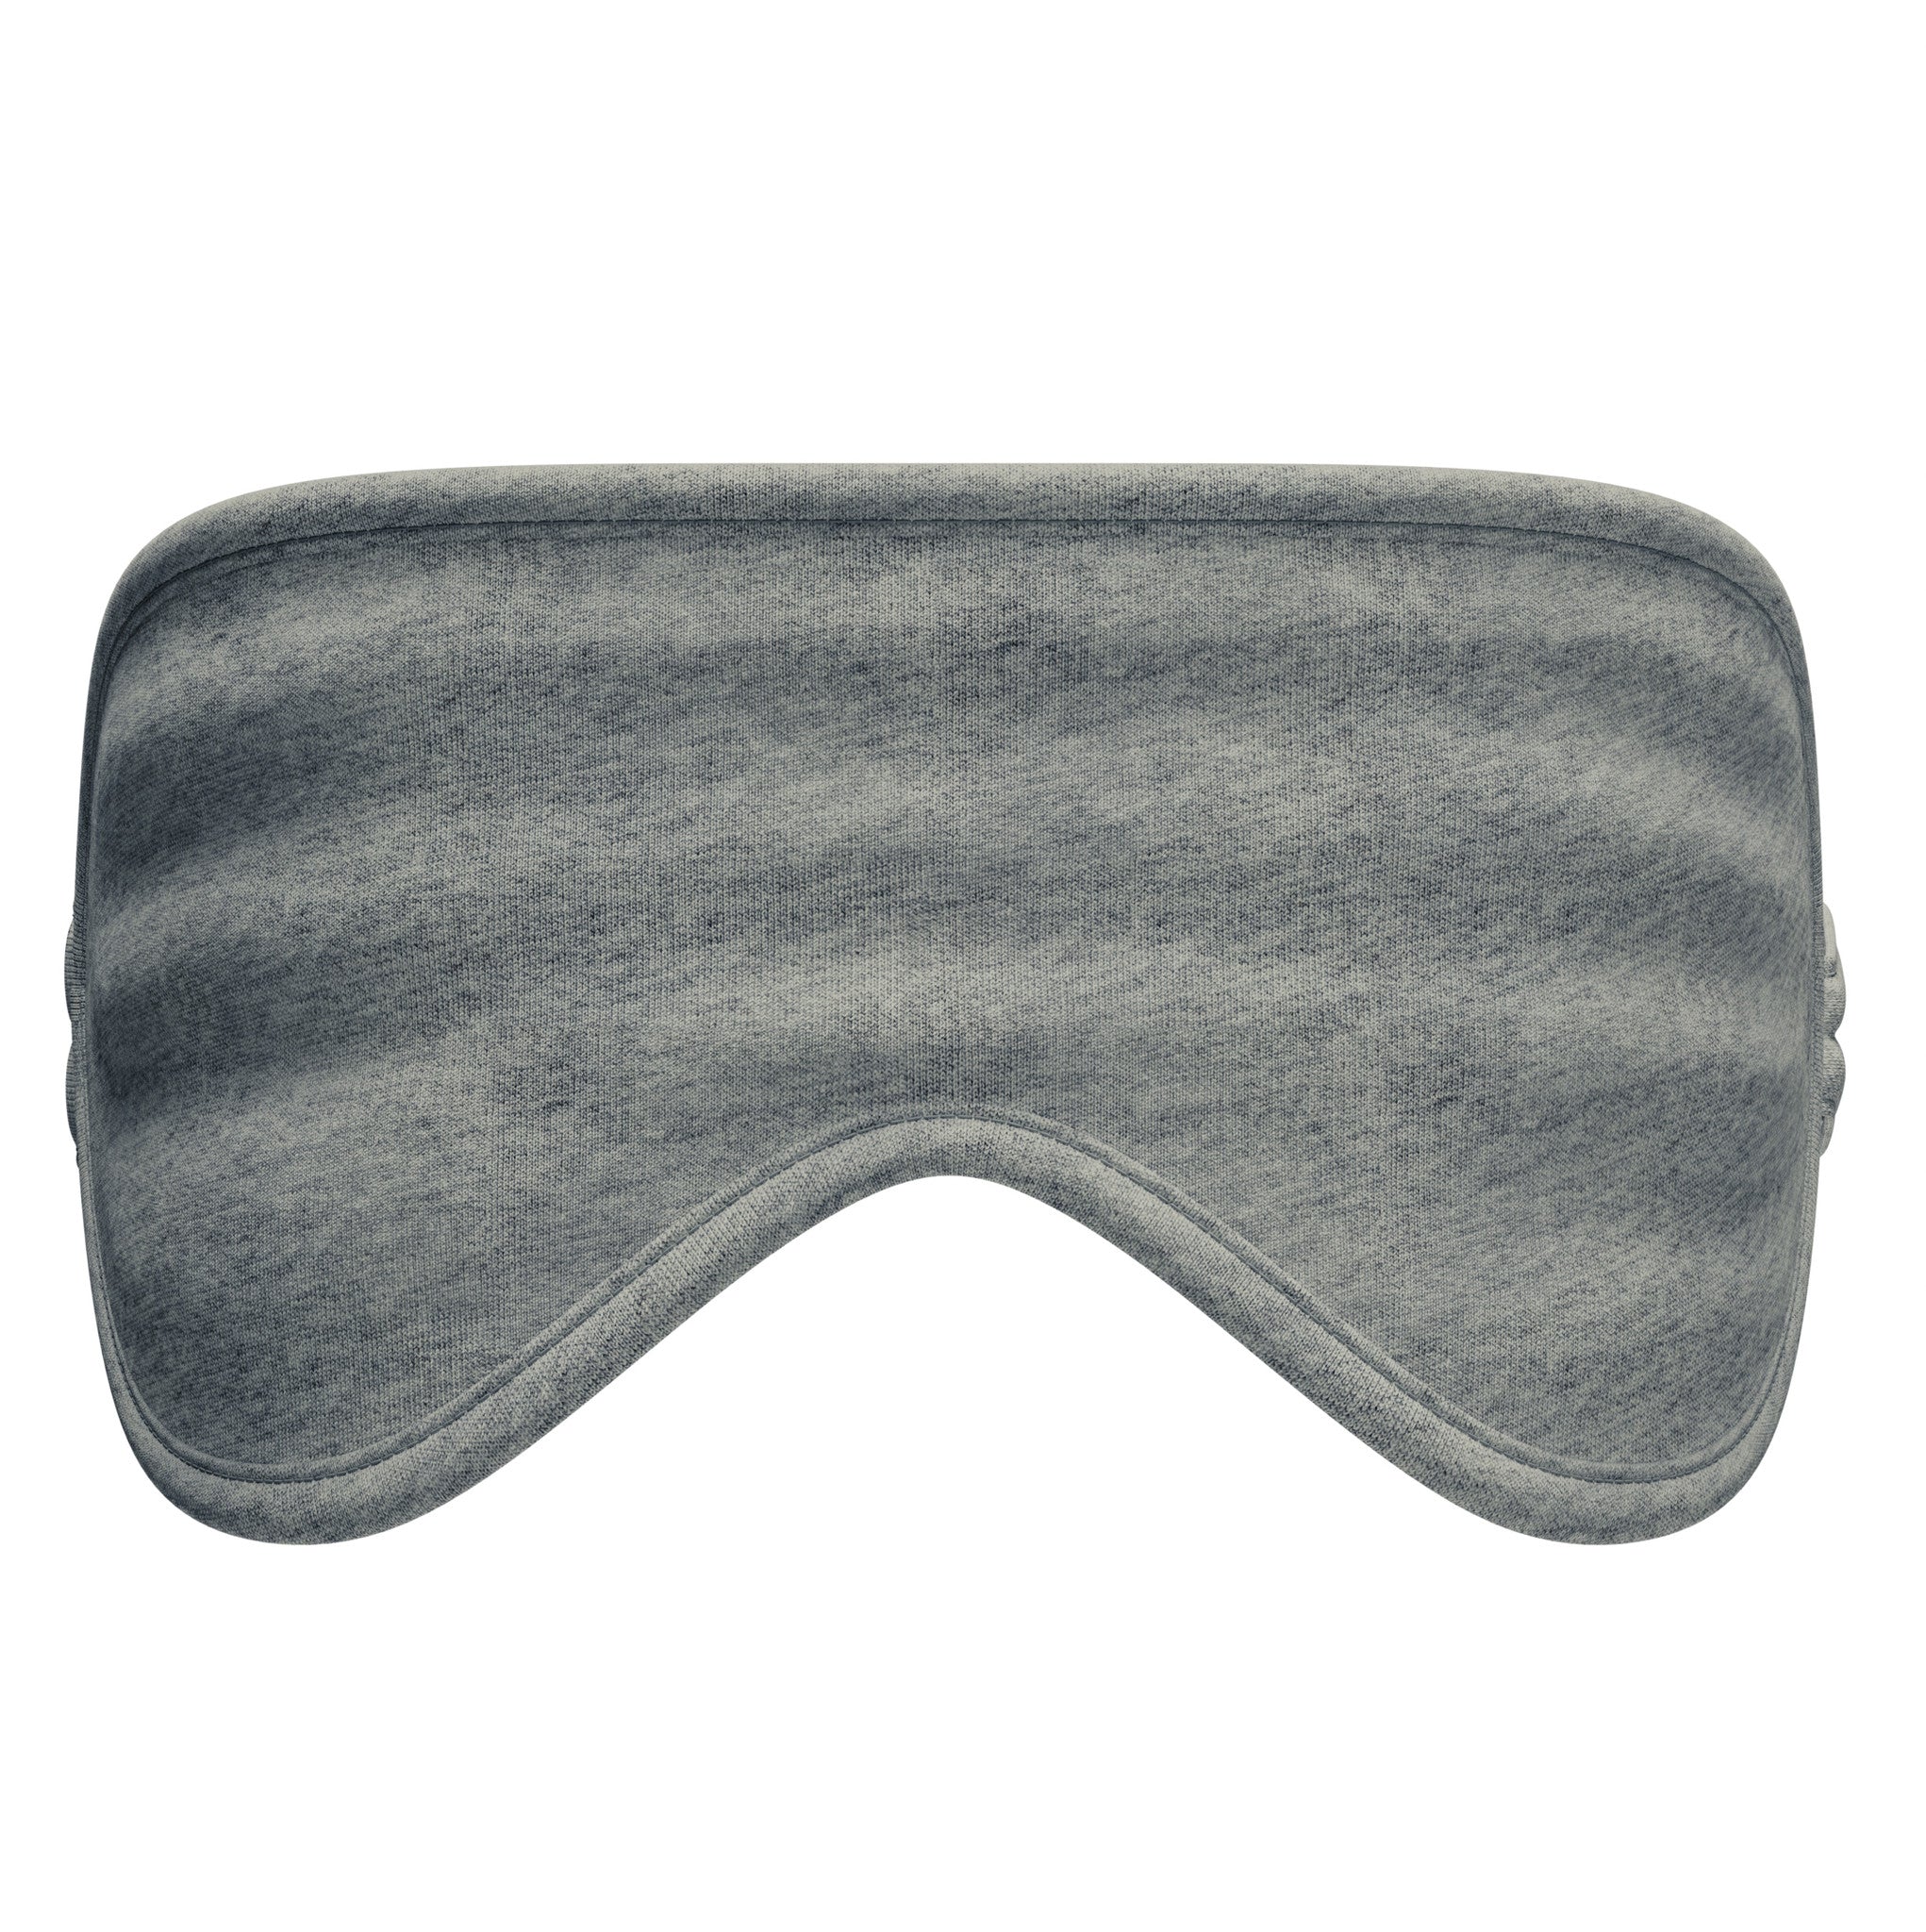 Cottonique Hypoallergenic Sleep Eye Mask Made from 100% Organic Cotton  (Melange Grey, Free Size)